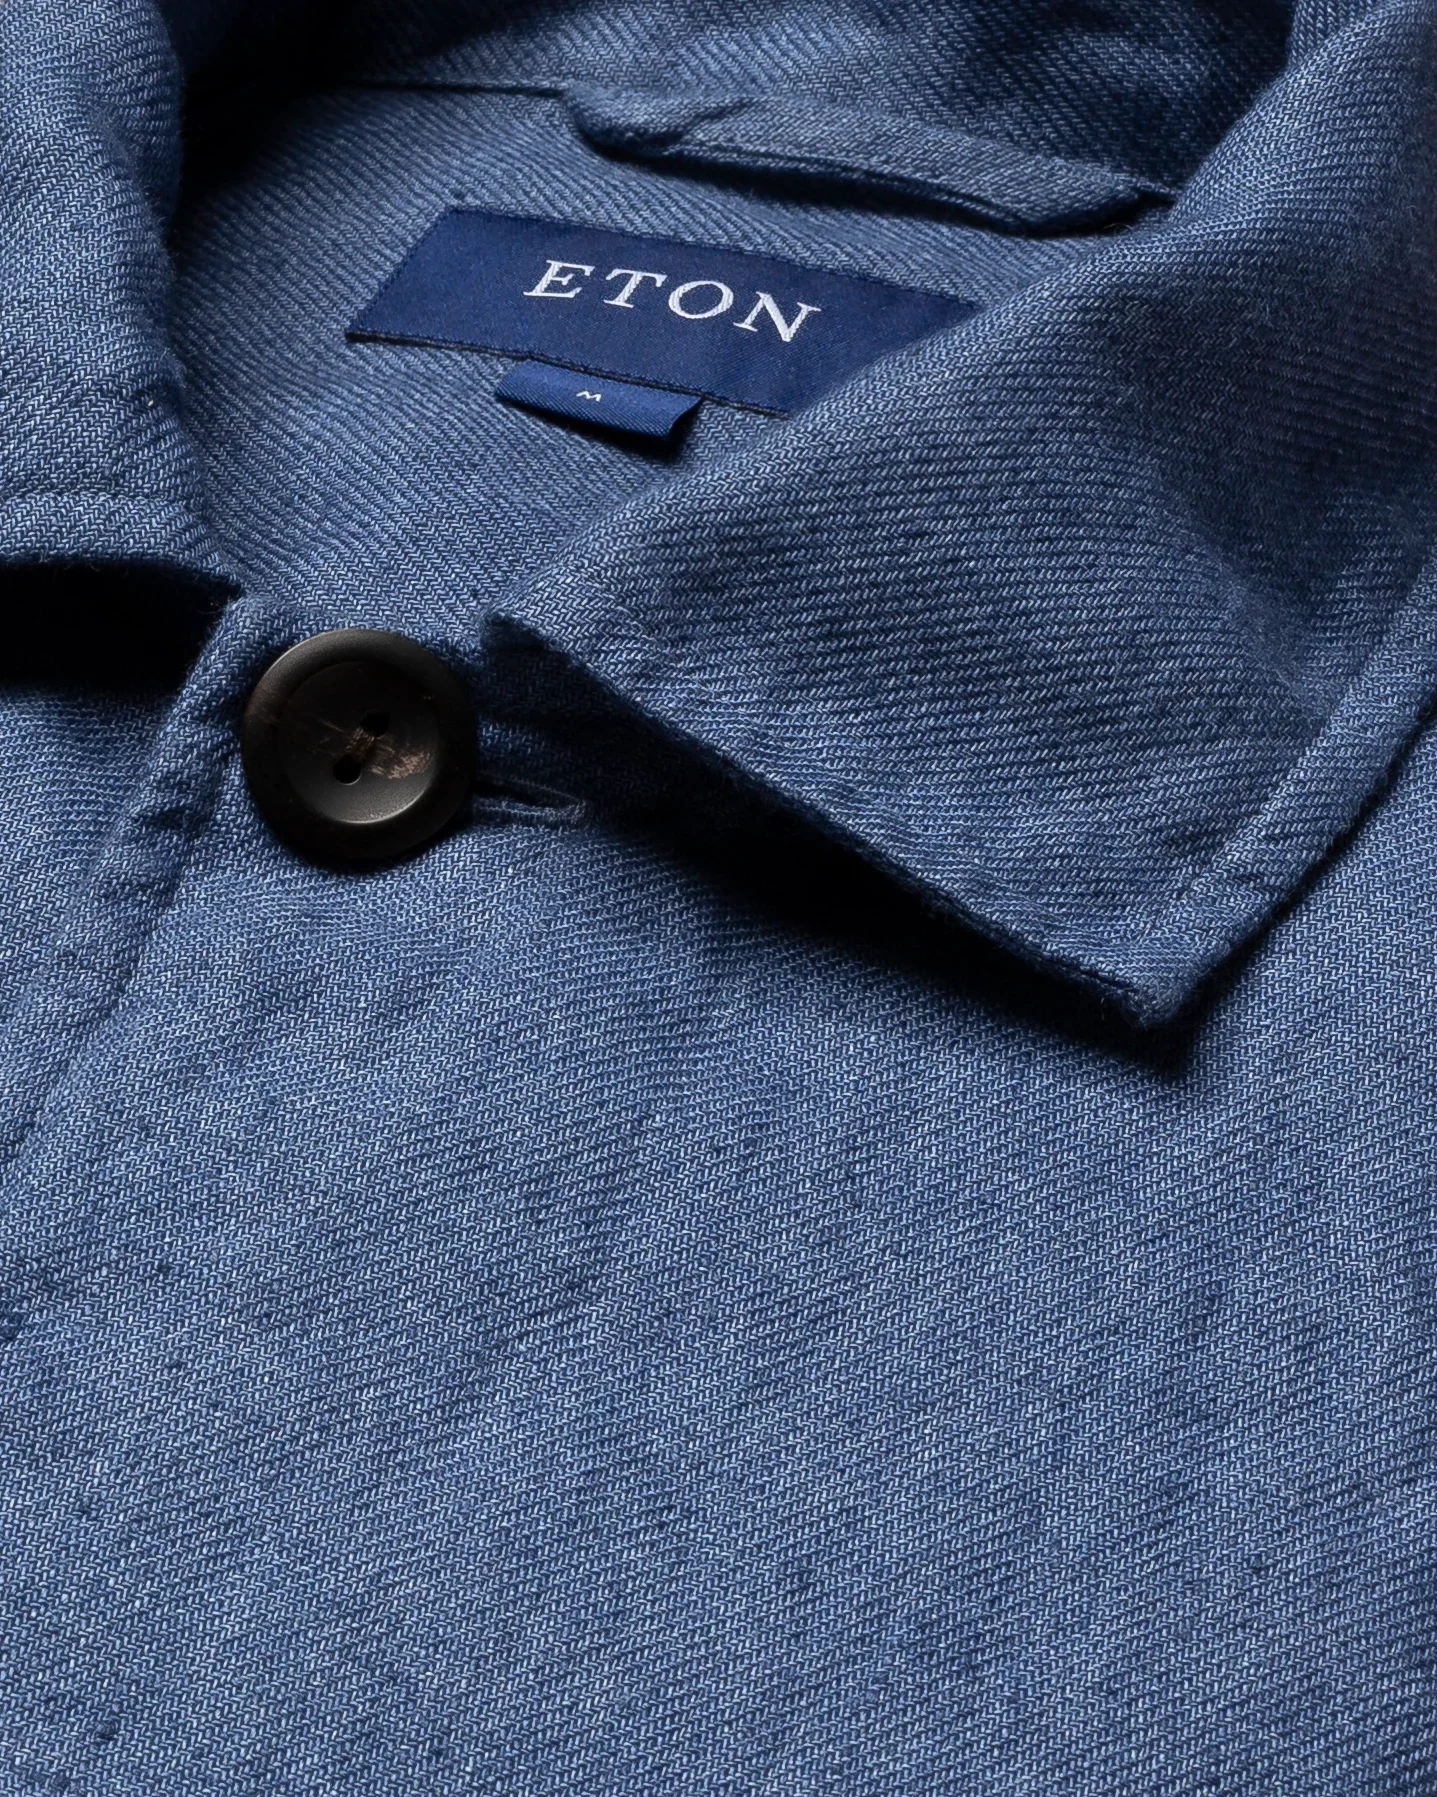 Eton - blue linen overshirt